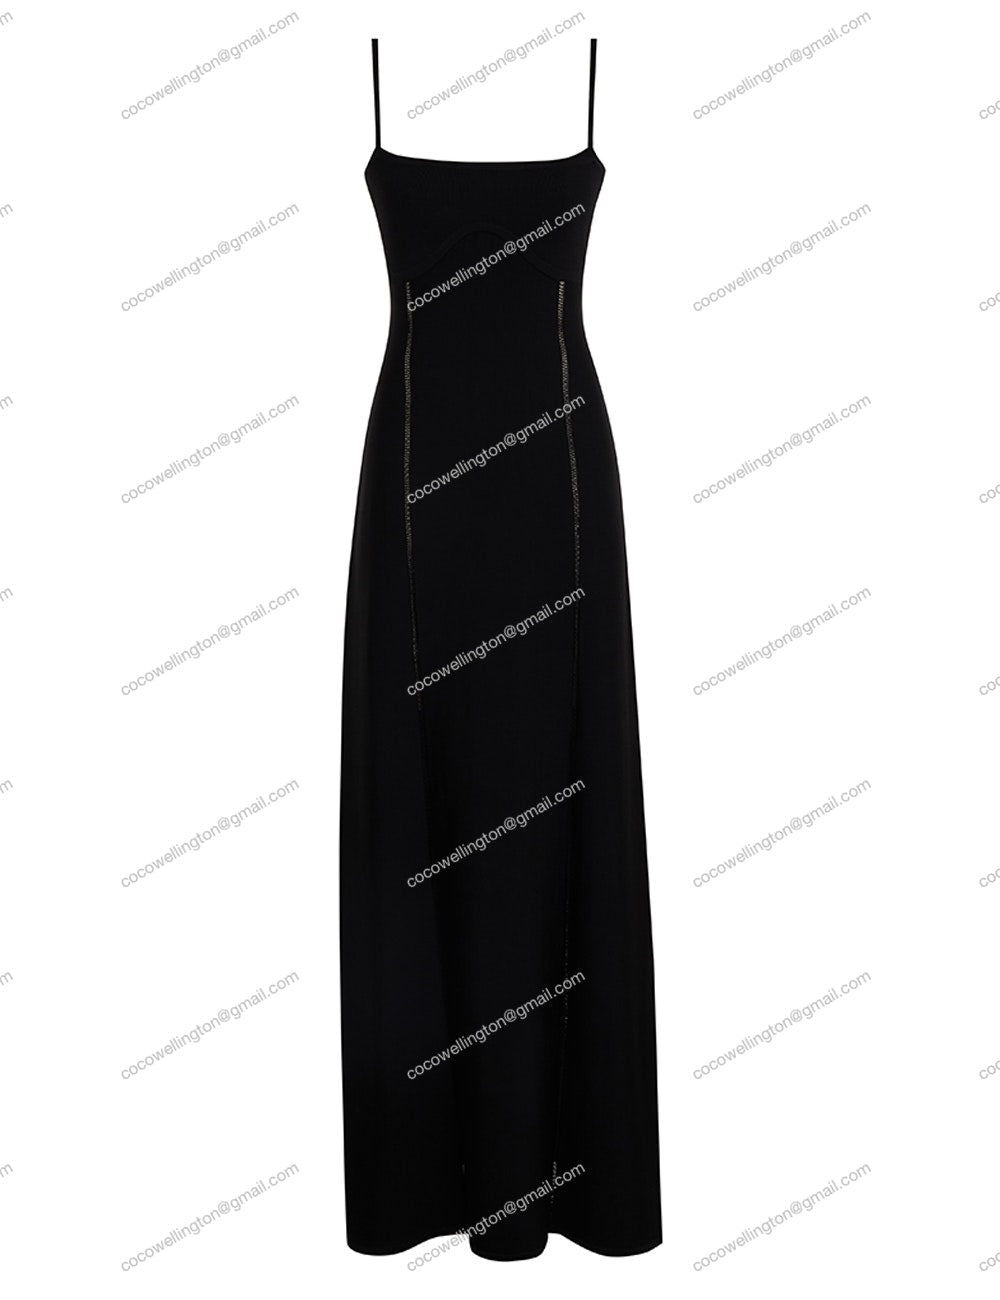 Matchmaker Knit Panelled Midi (Black)